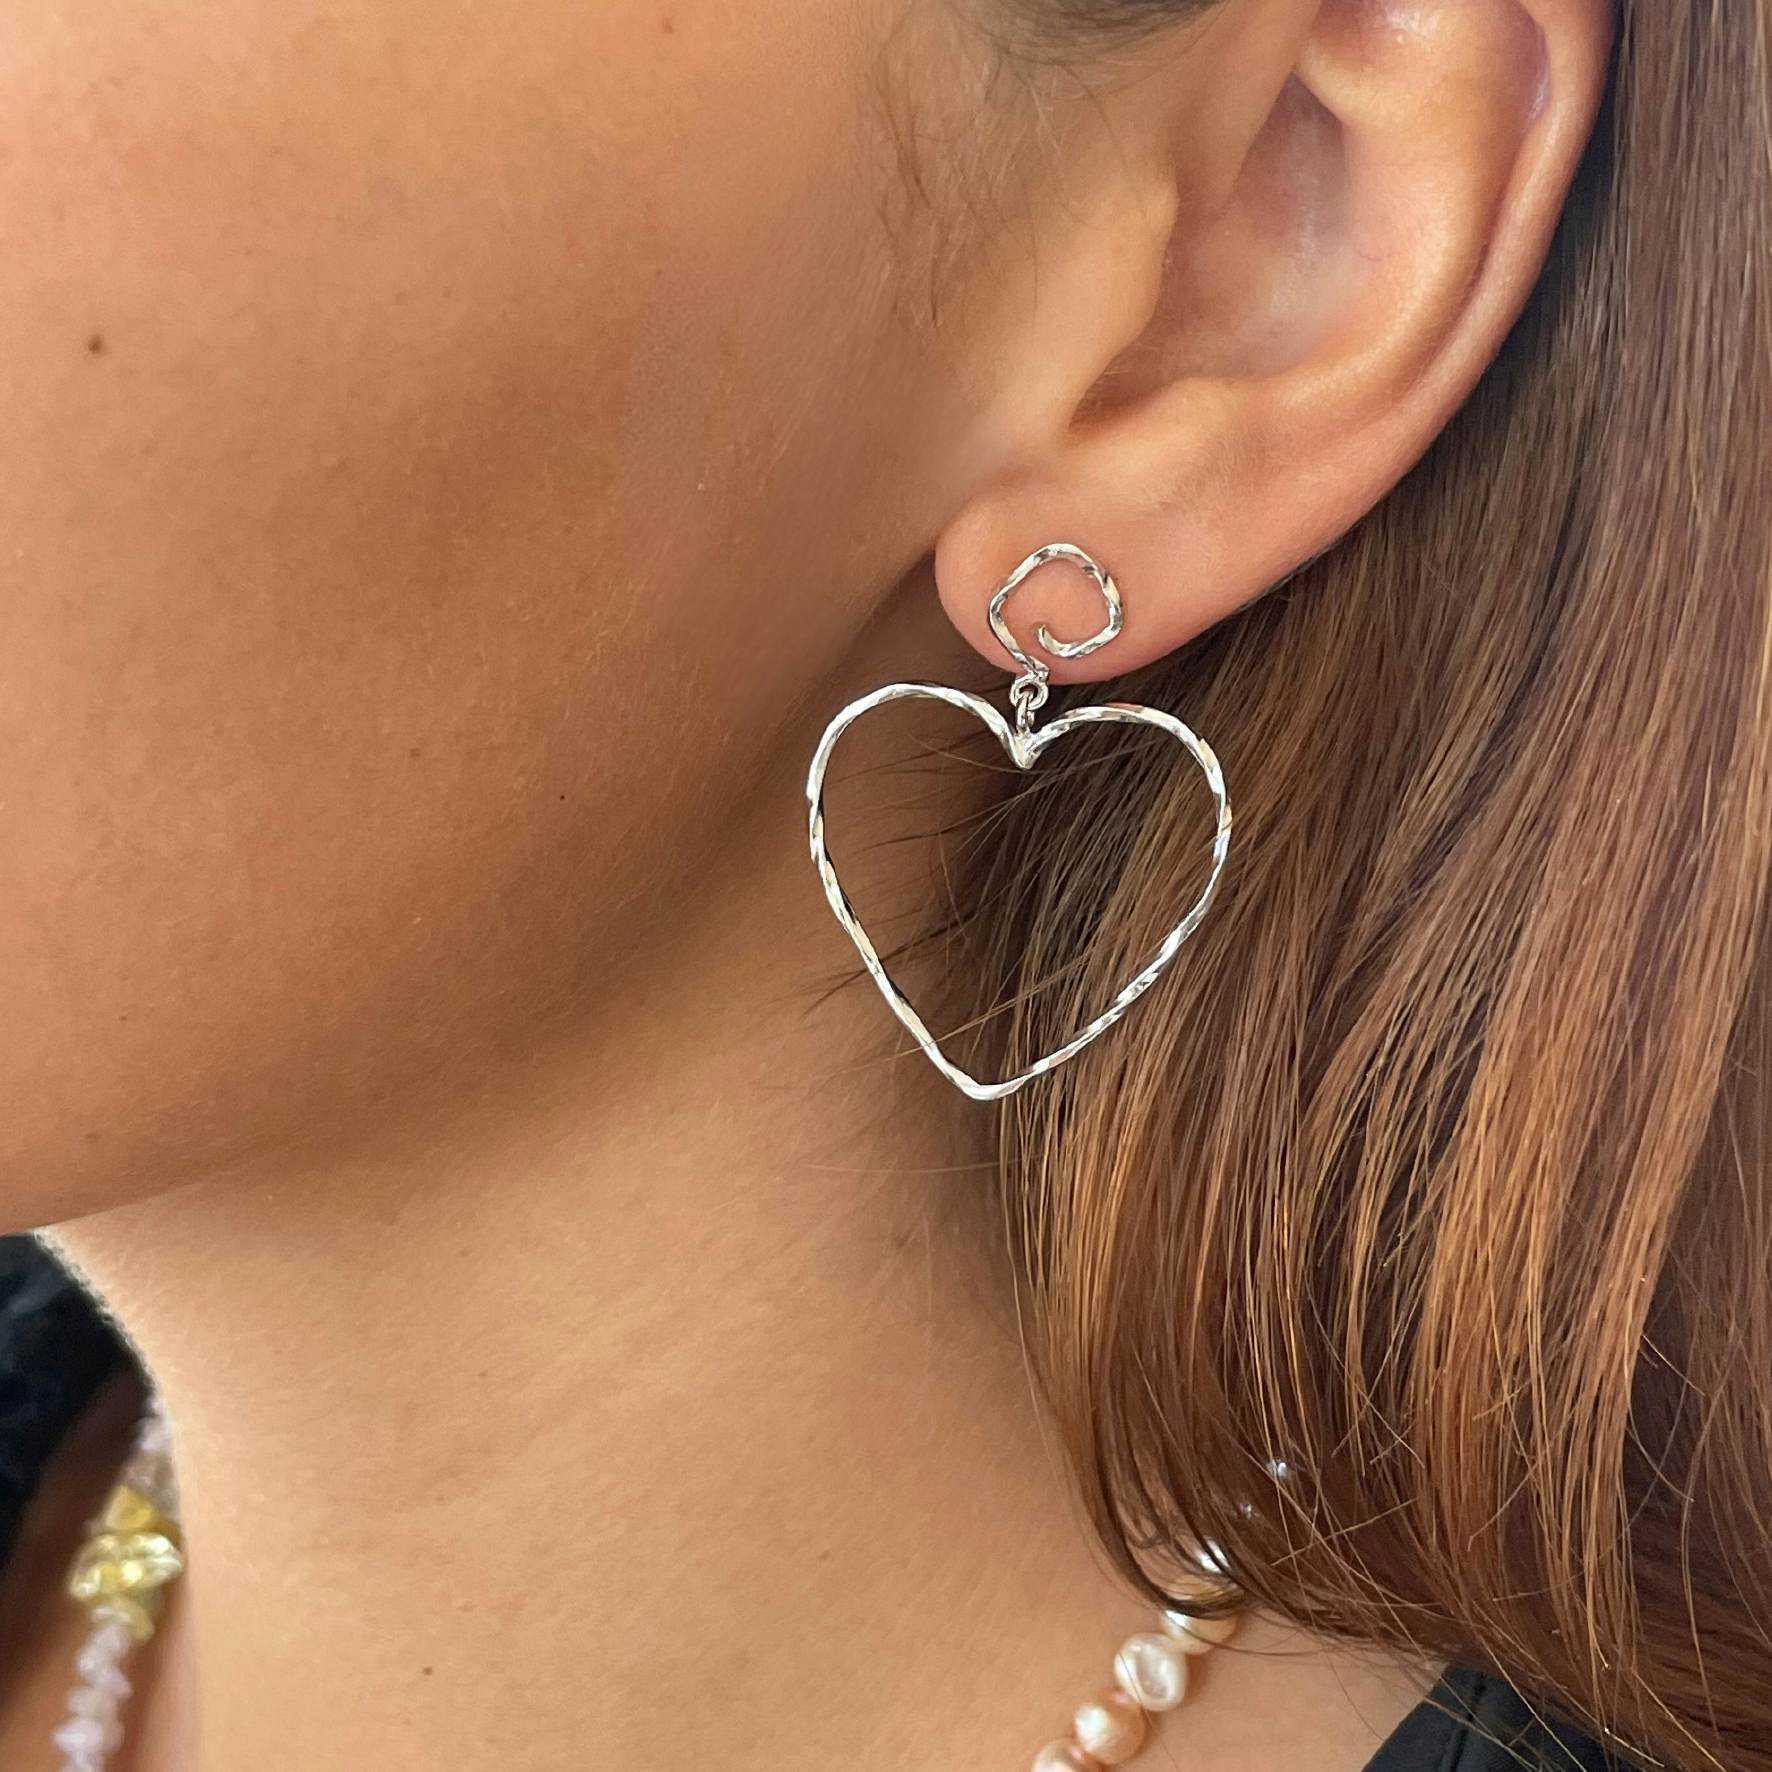 Funky Heart Earring from STINE A Jewelry in Silver Sterling 925